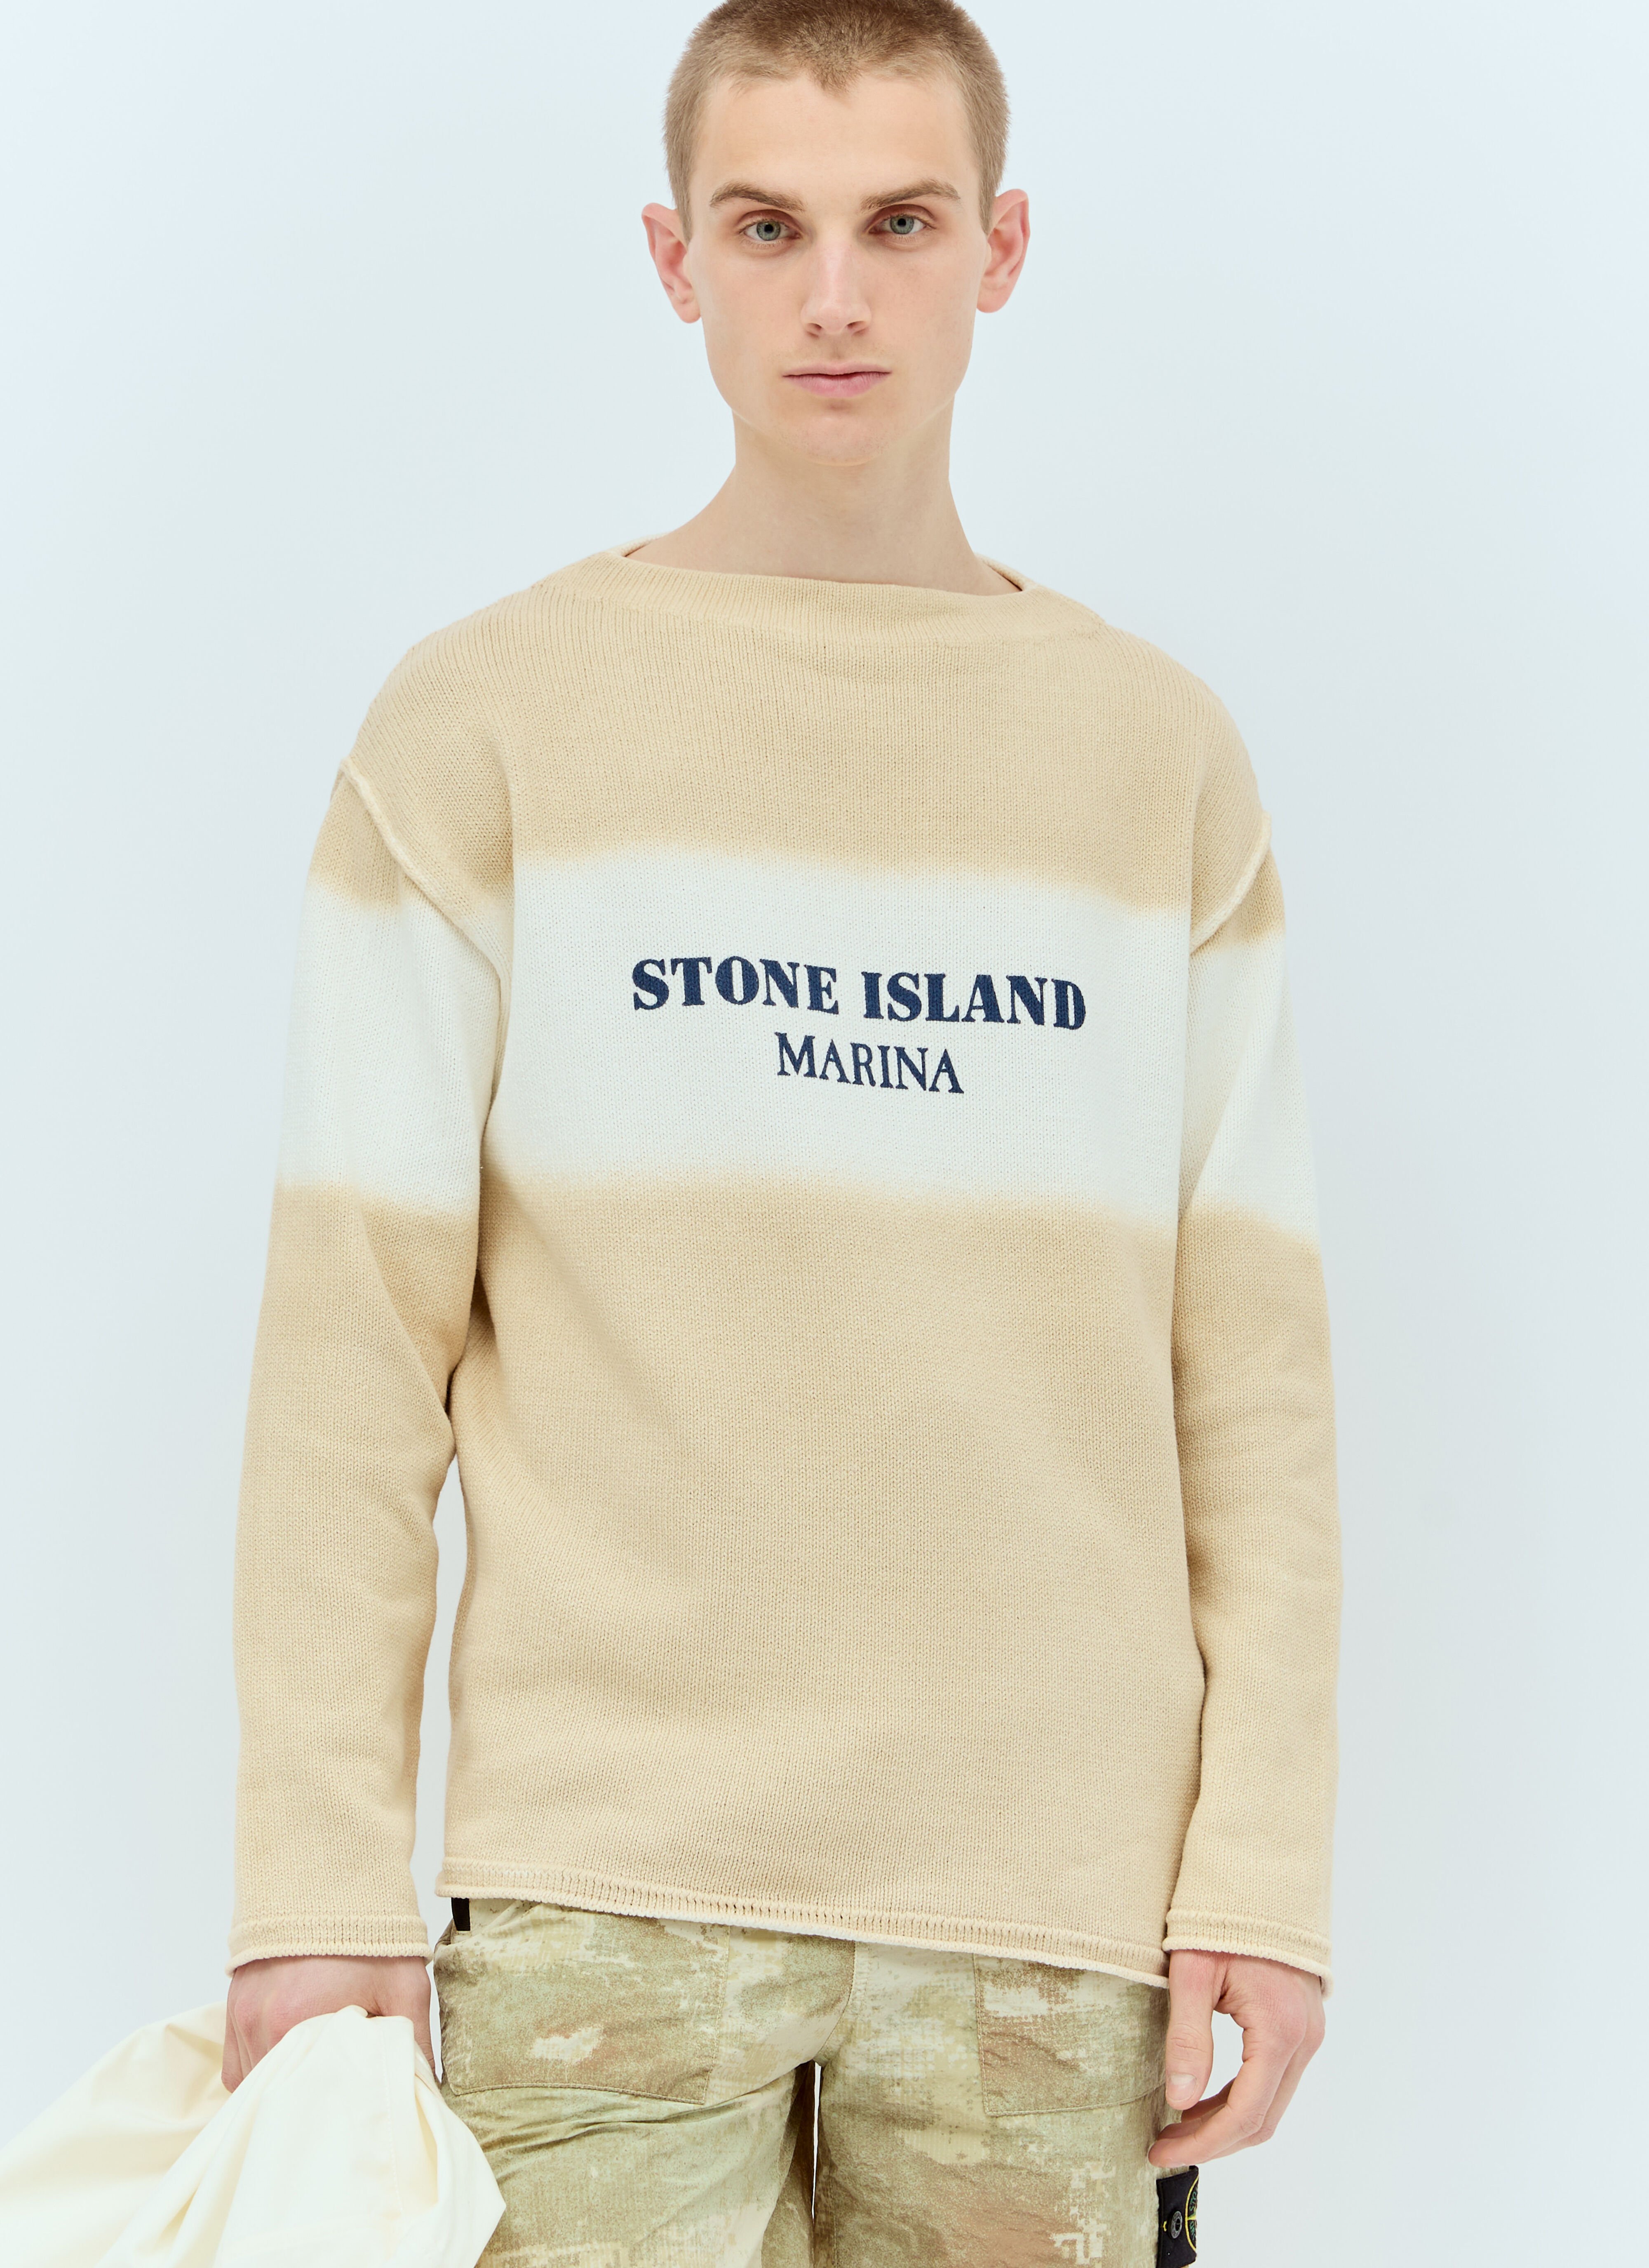 Stone Island Marina Sweater Grey sto0156017